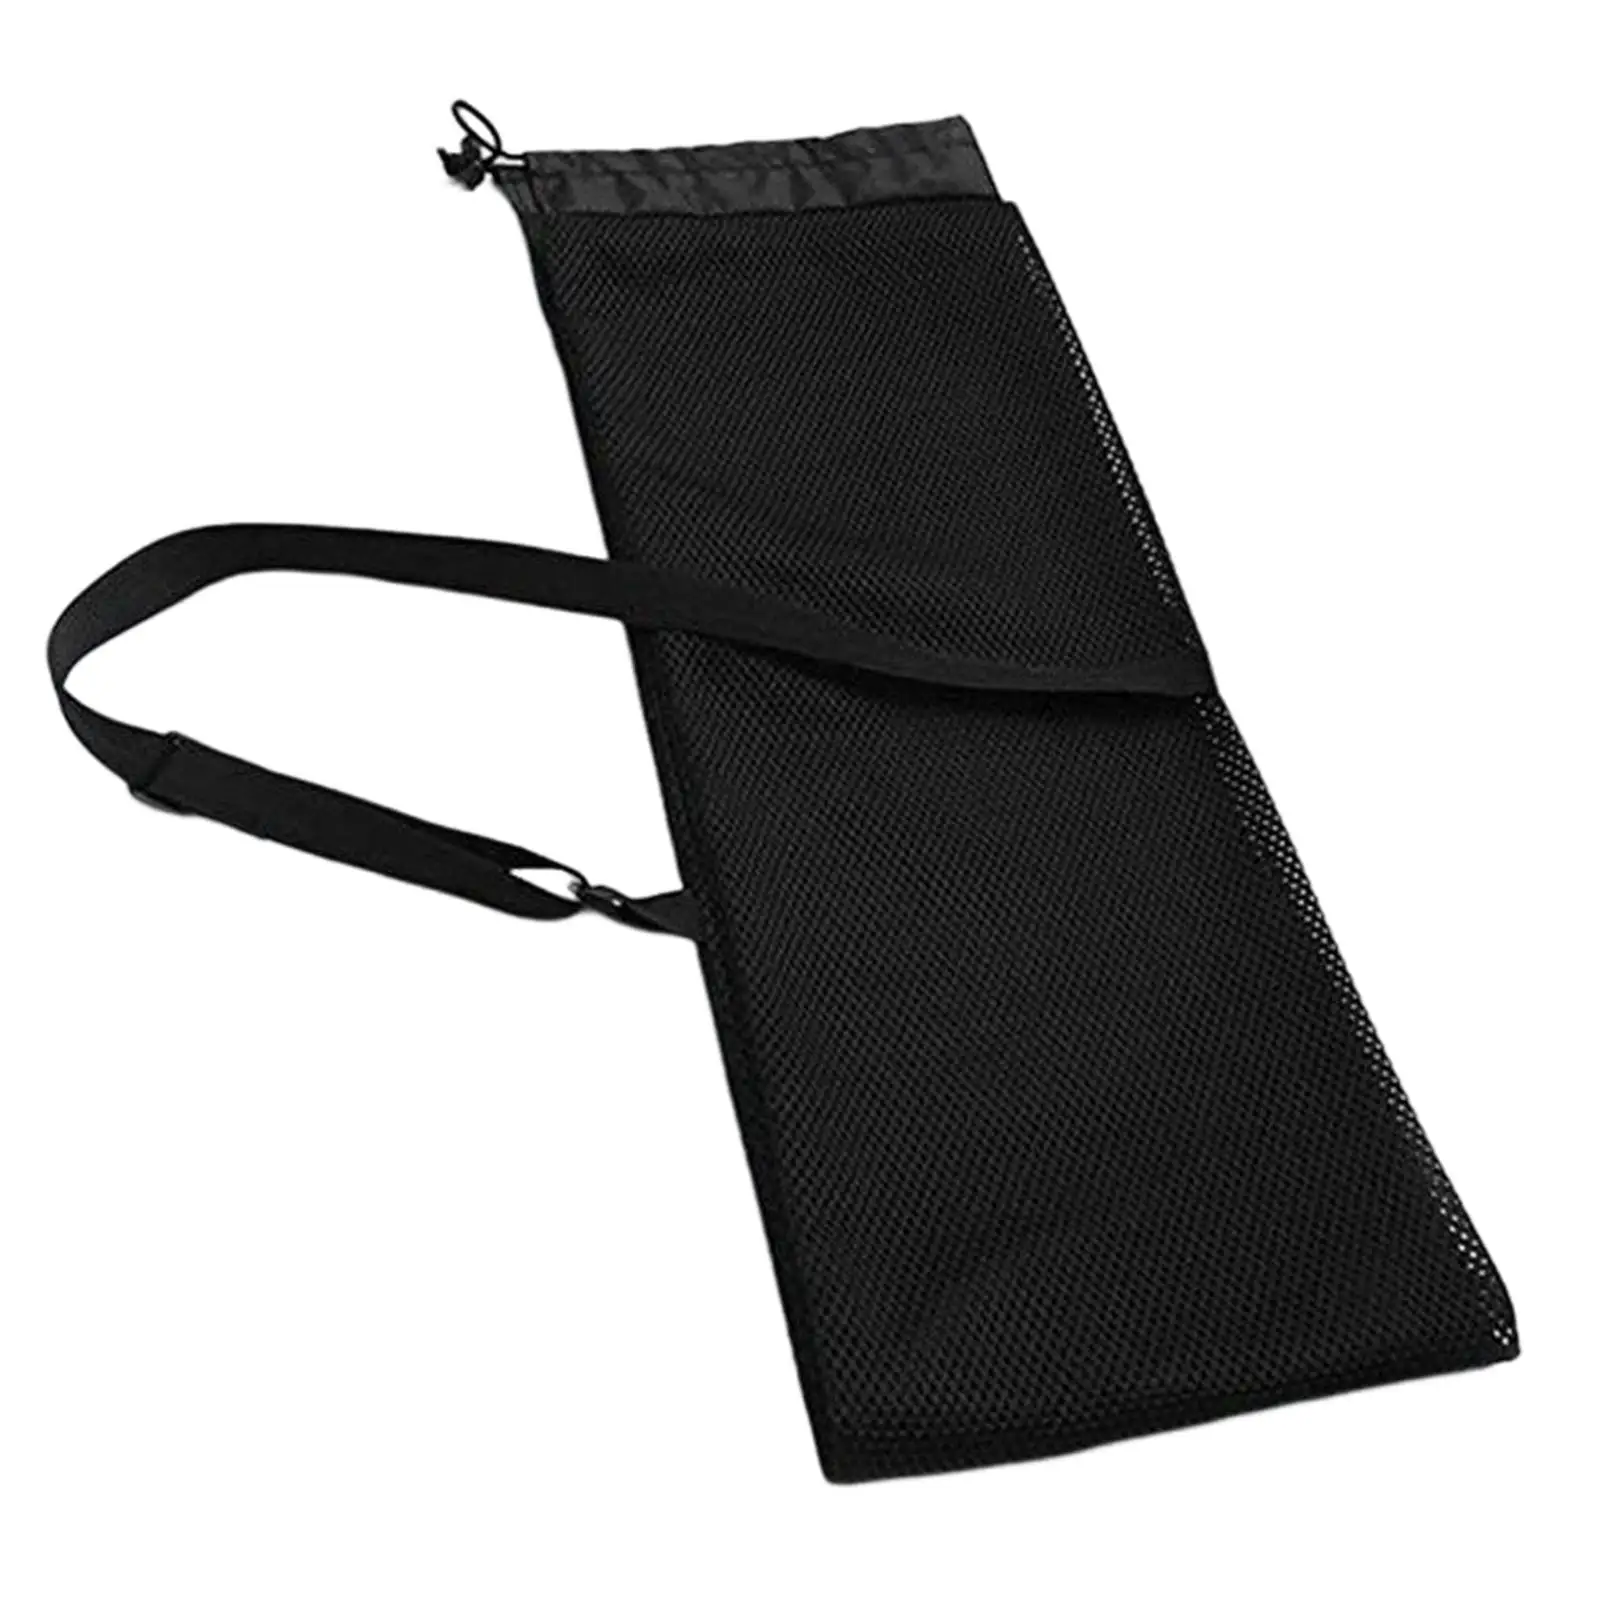 Durable Kayak Paddle Bag Adjustable Strap for Canoe Holder Carrying Bag Split Shaft Drawstring Mesh Pouch Case Protector Cover